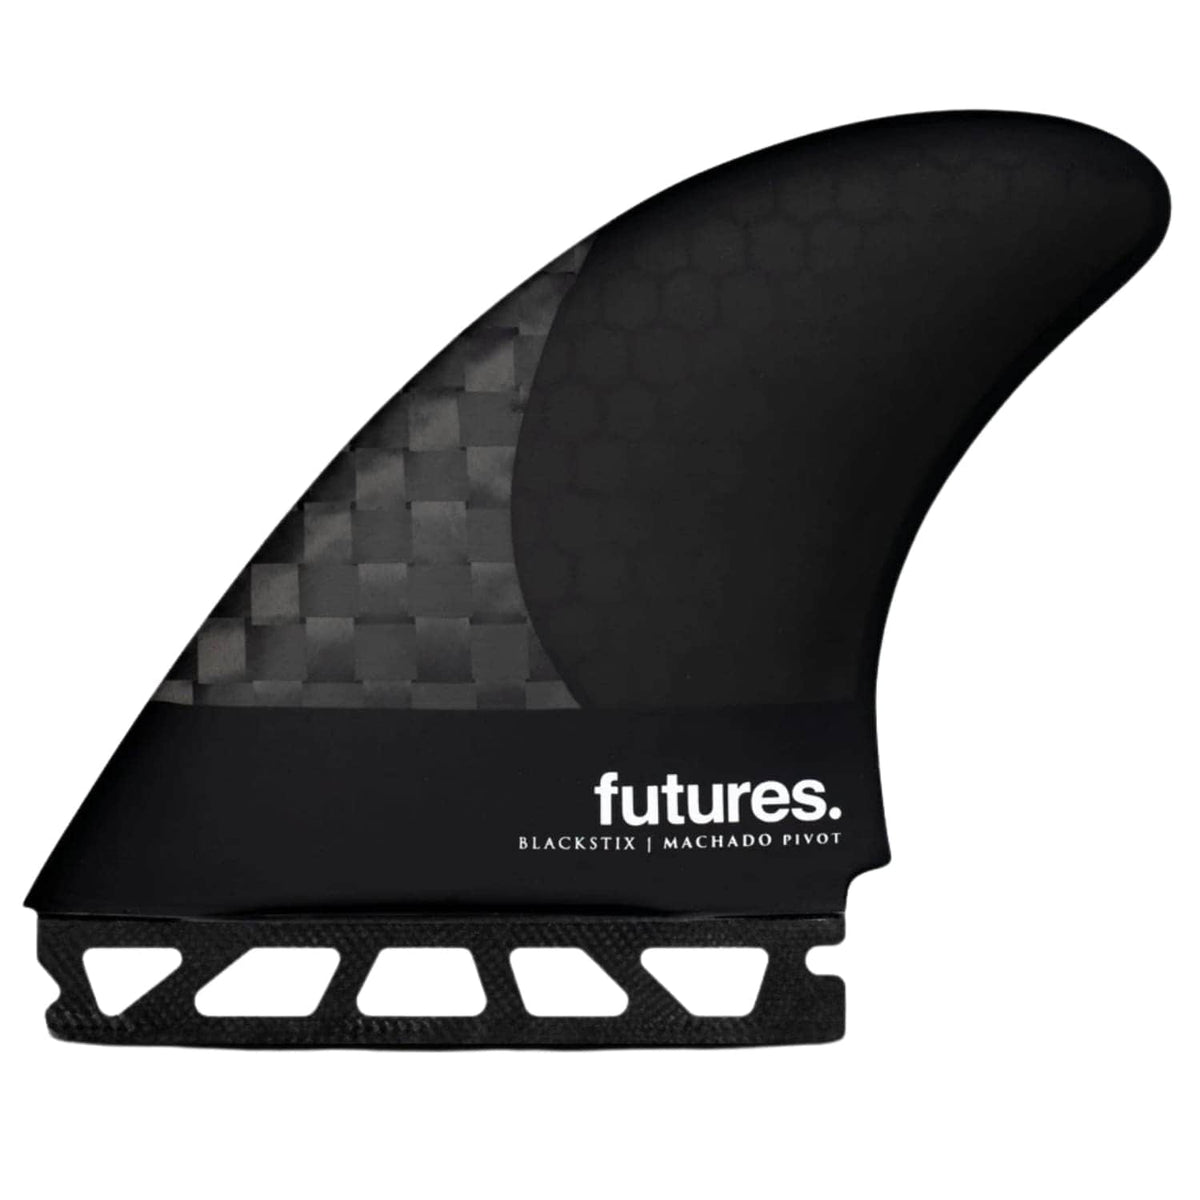 Futures Machado Pivot Blackstix Thruster Surfboard Fins - Black Swirl - Futures Fins by Futures Large Fins